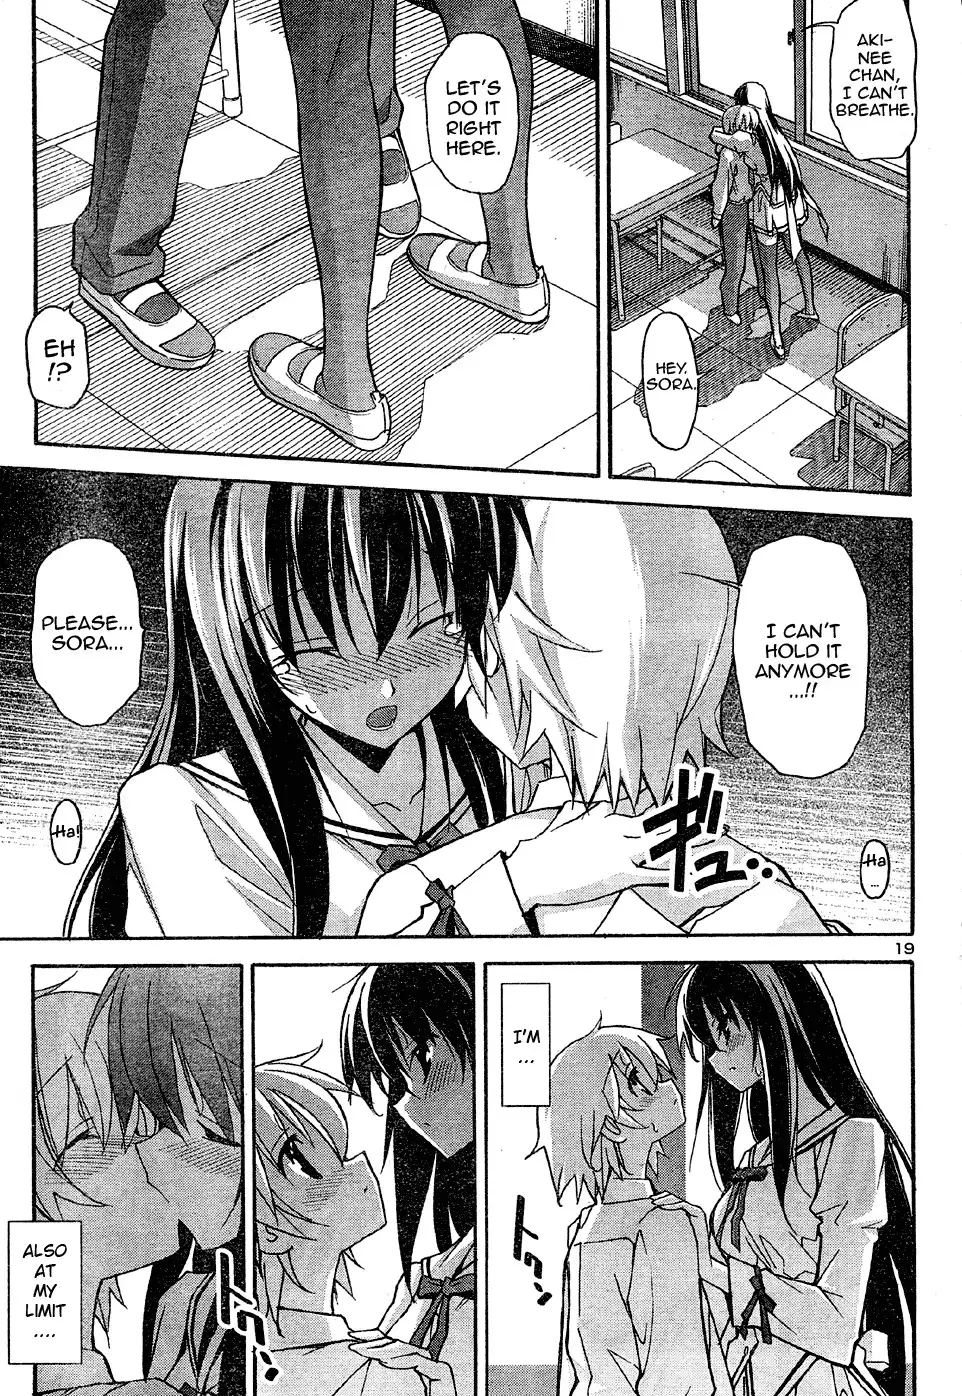 Aki sora threesome scene manga